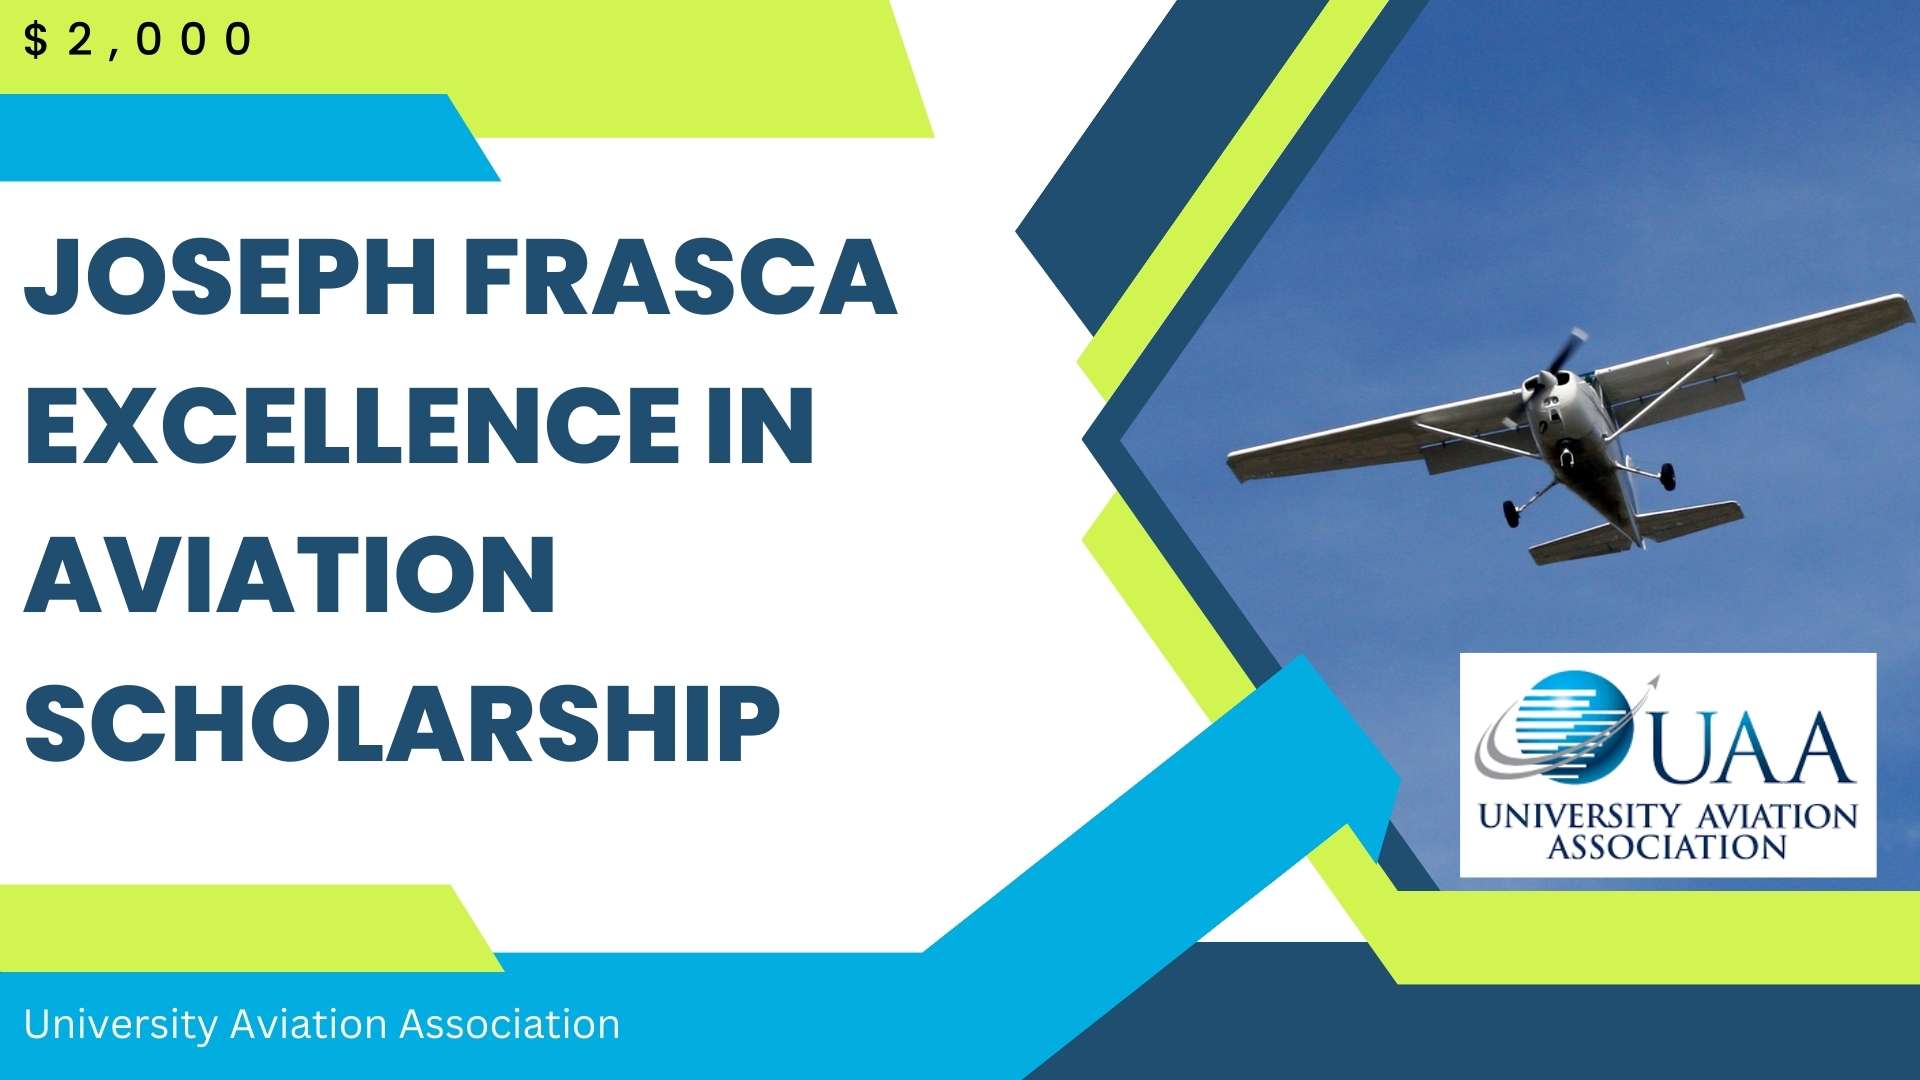 Joseph Frasca Excellence in Aviation Scholarship